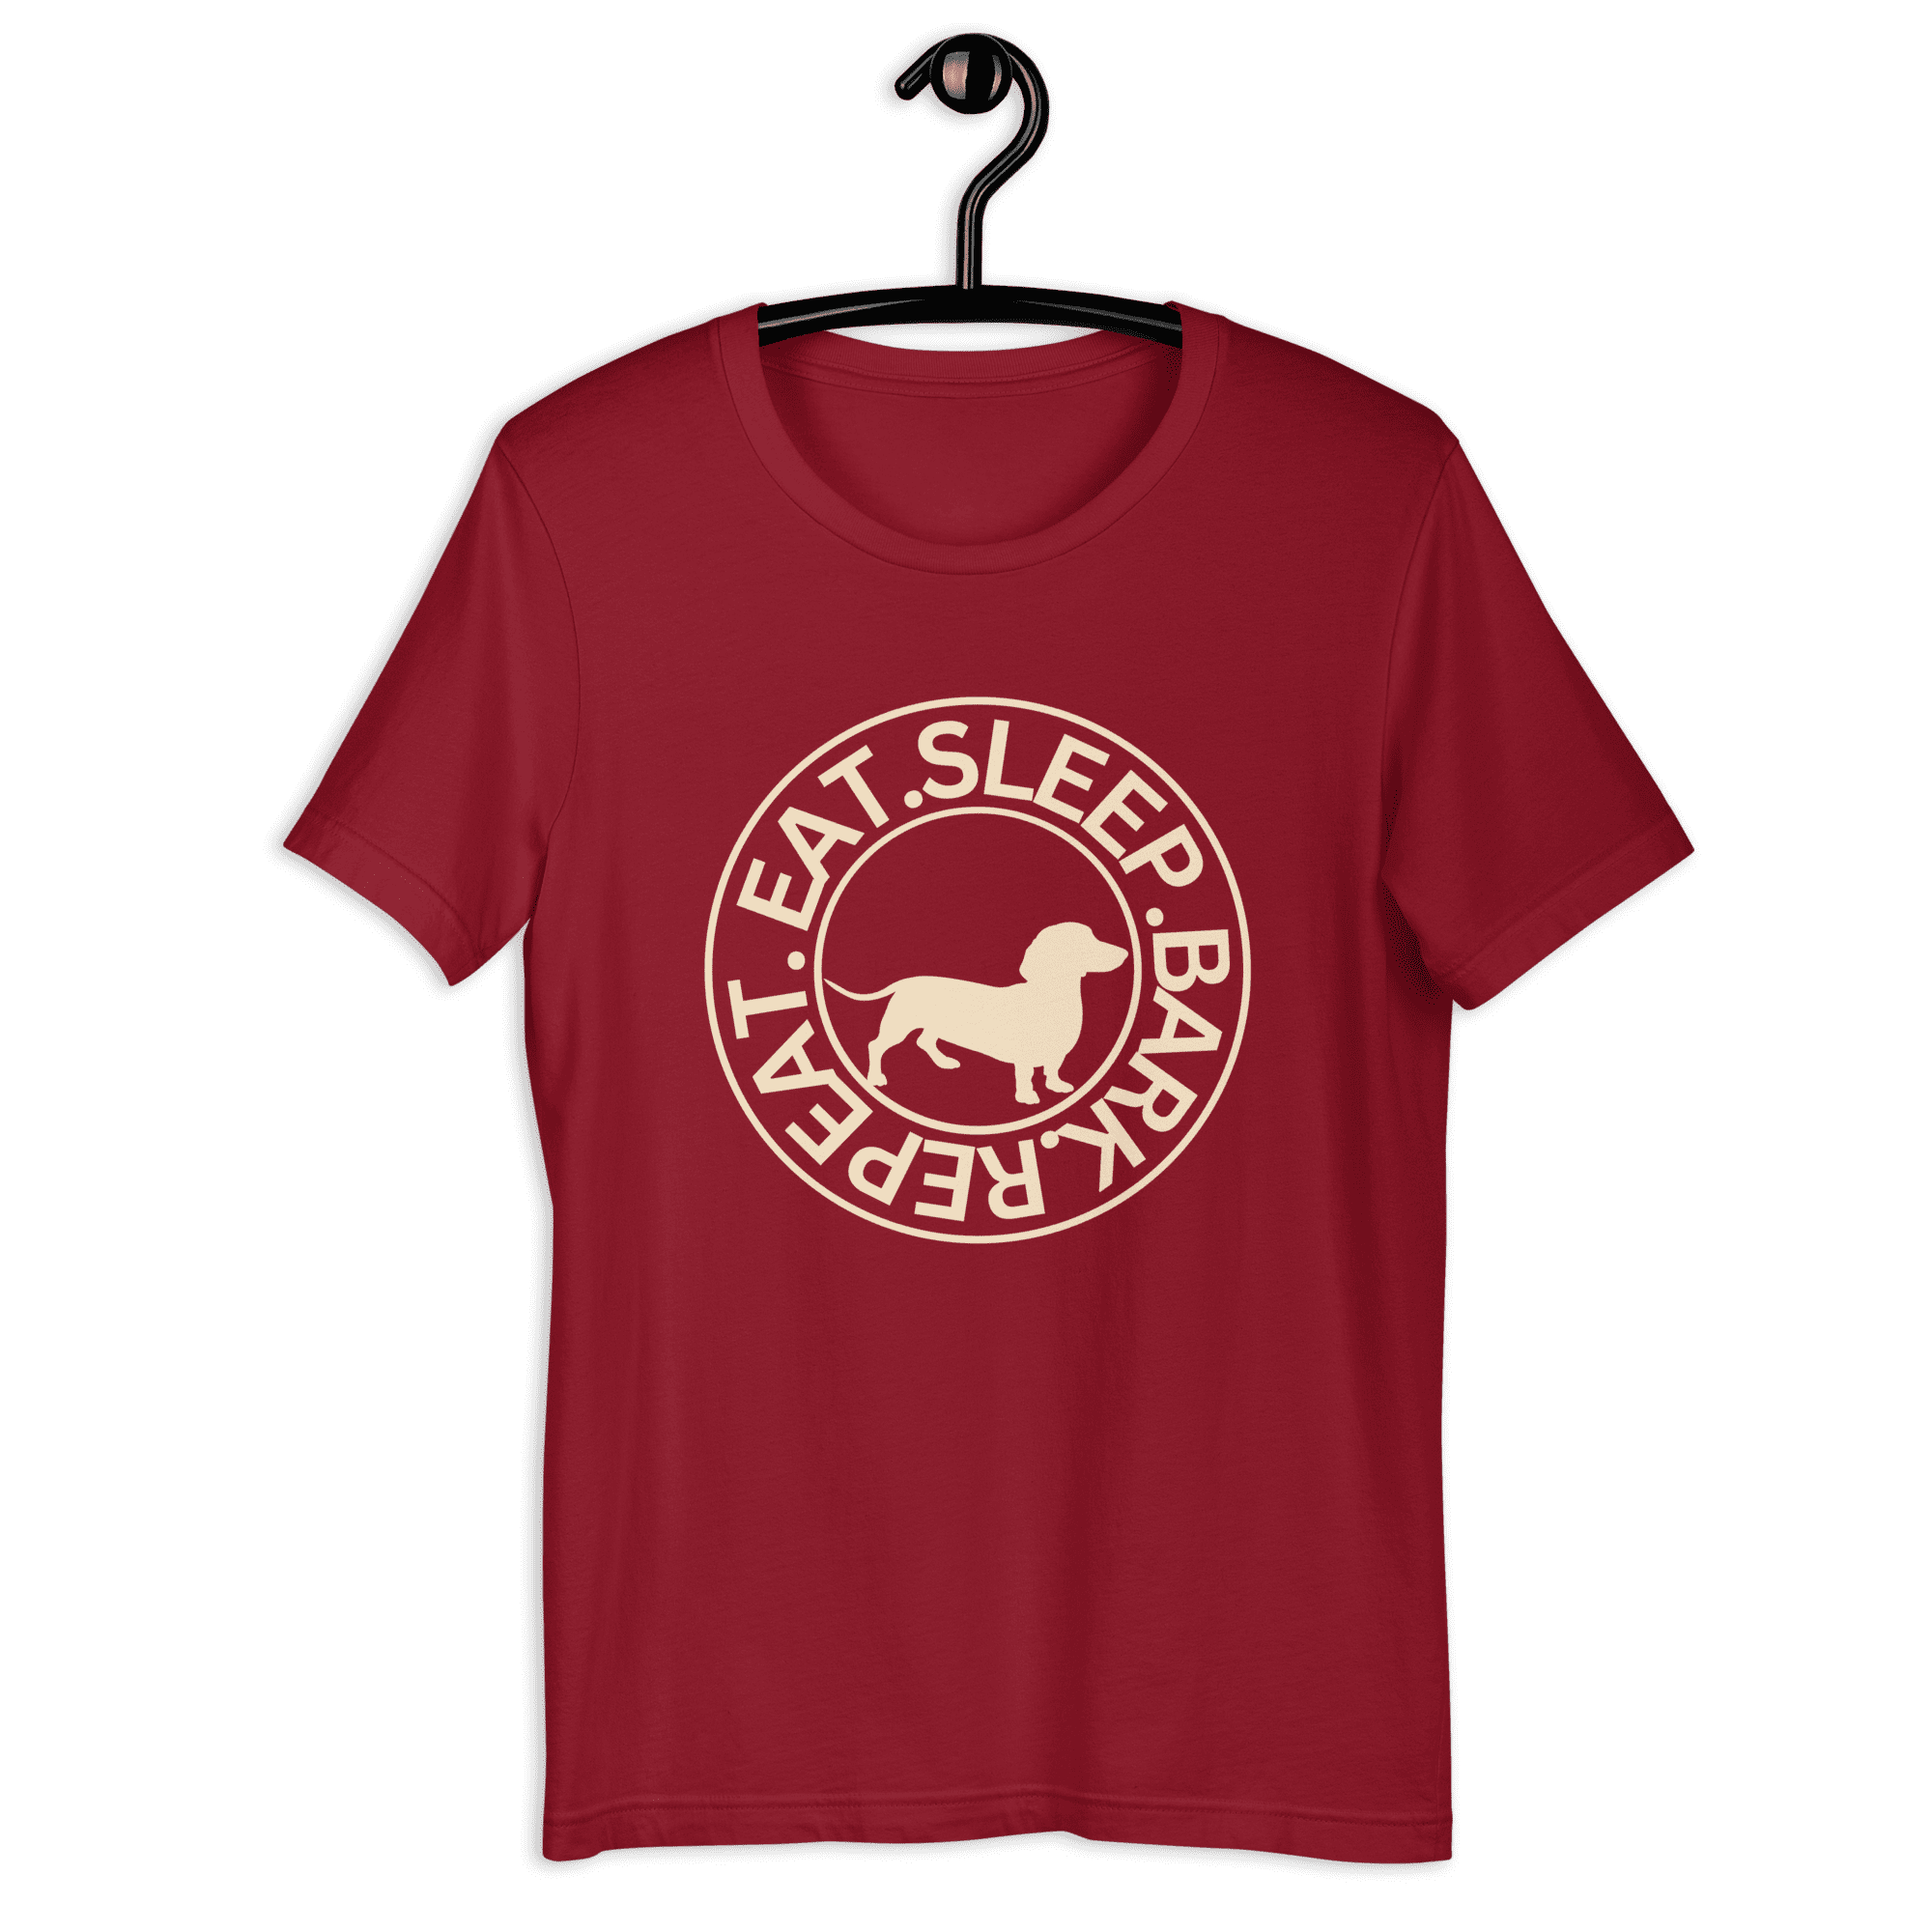 Eat Sleep Bark Repeat Transylvanian Hound (Erdélyi Kopó) Unisex T-Shirt. Red